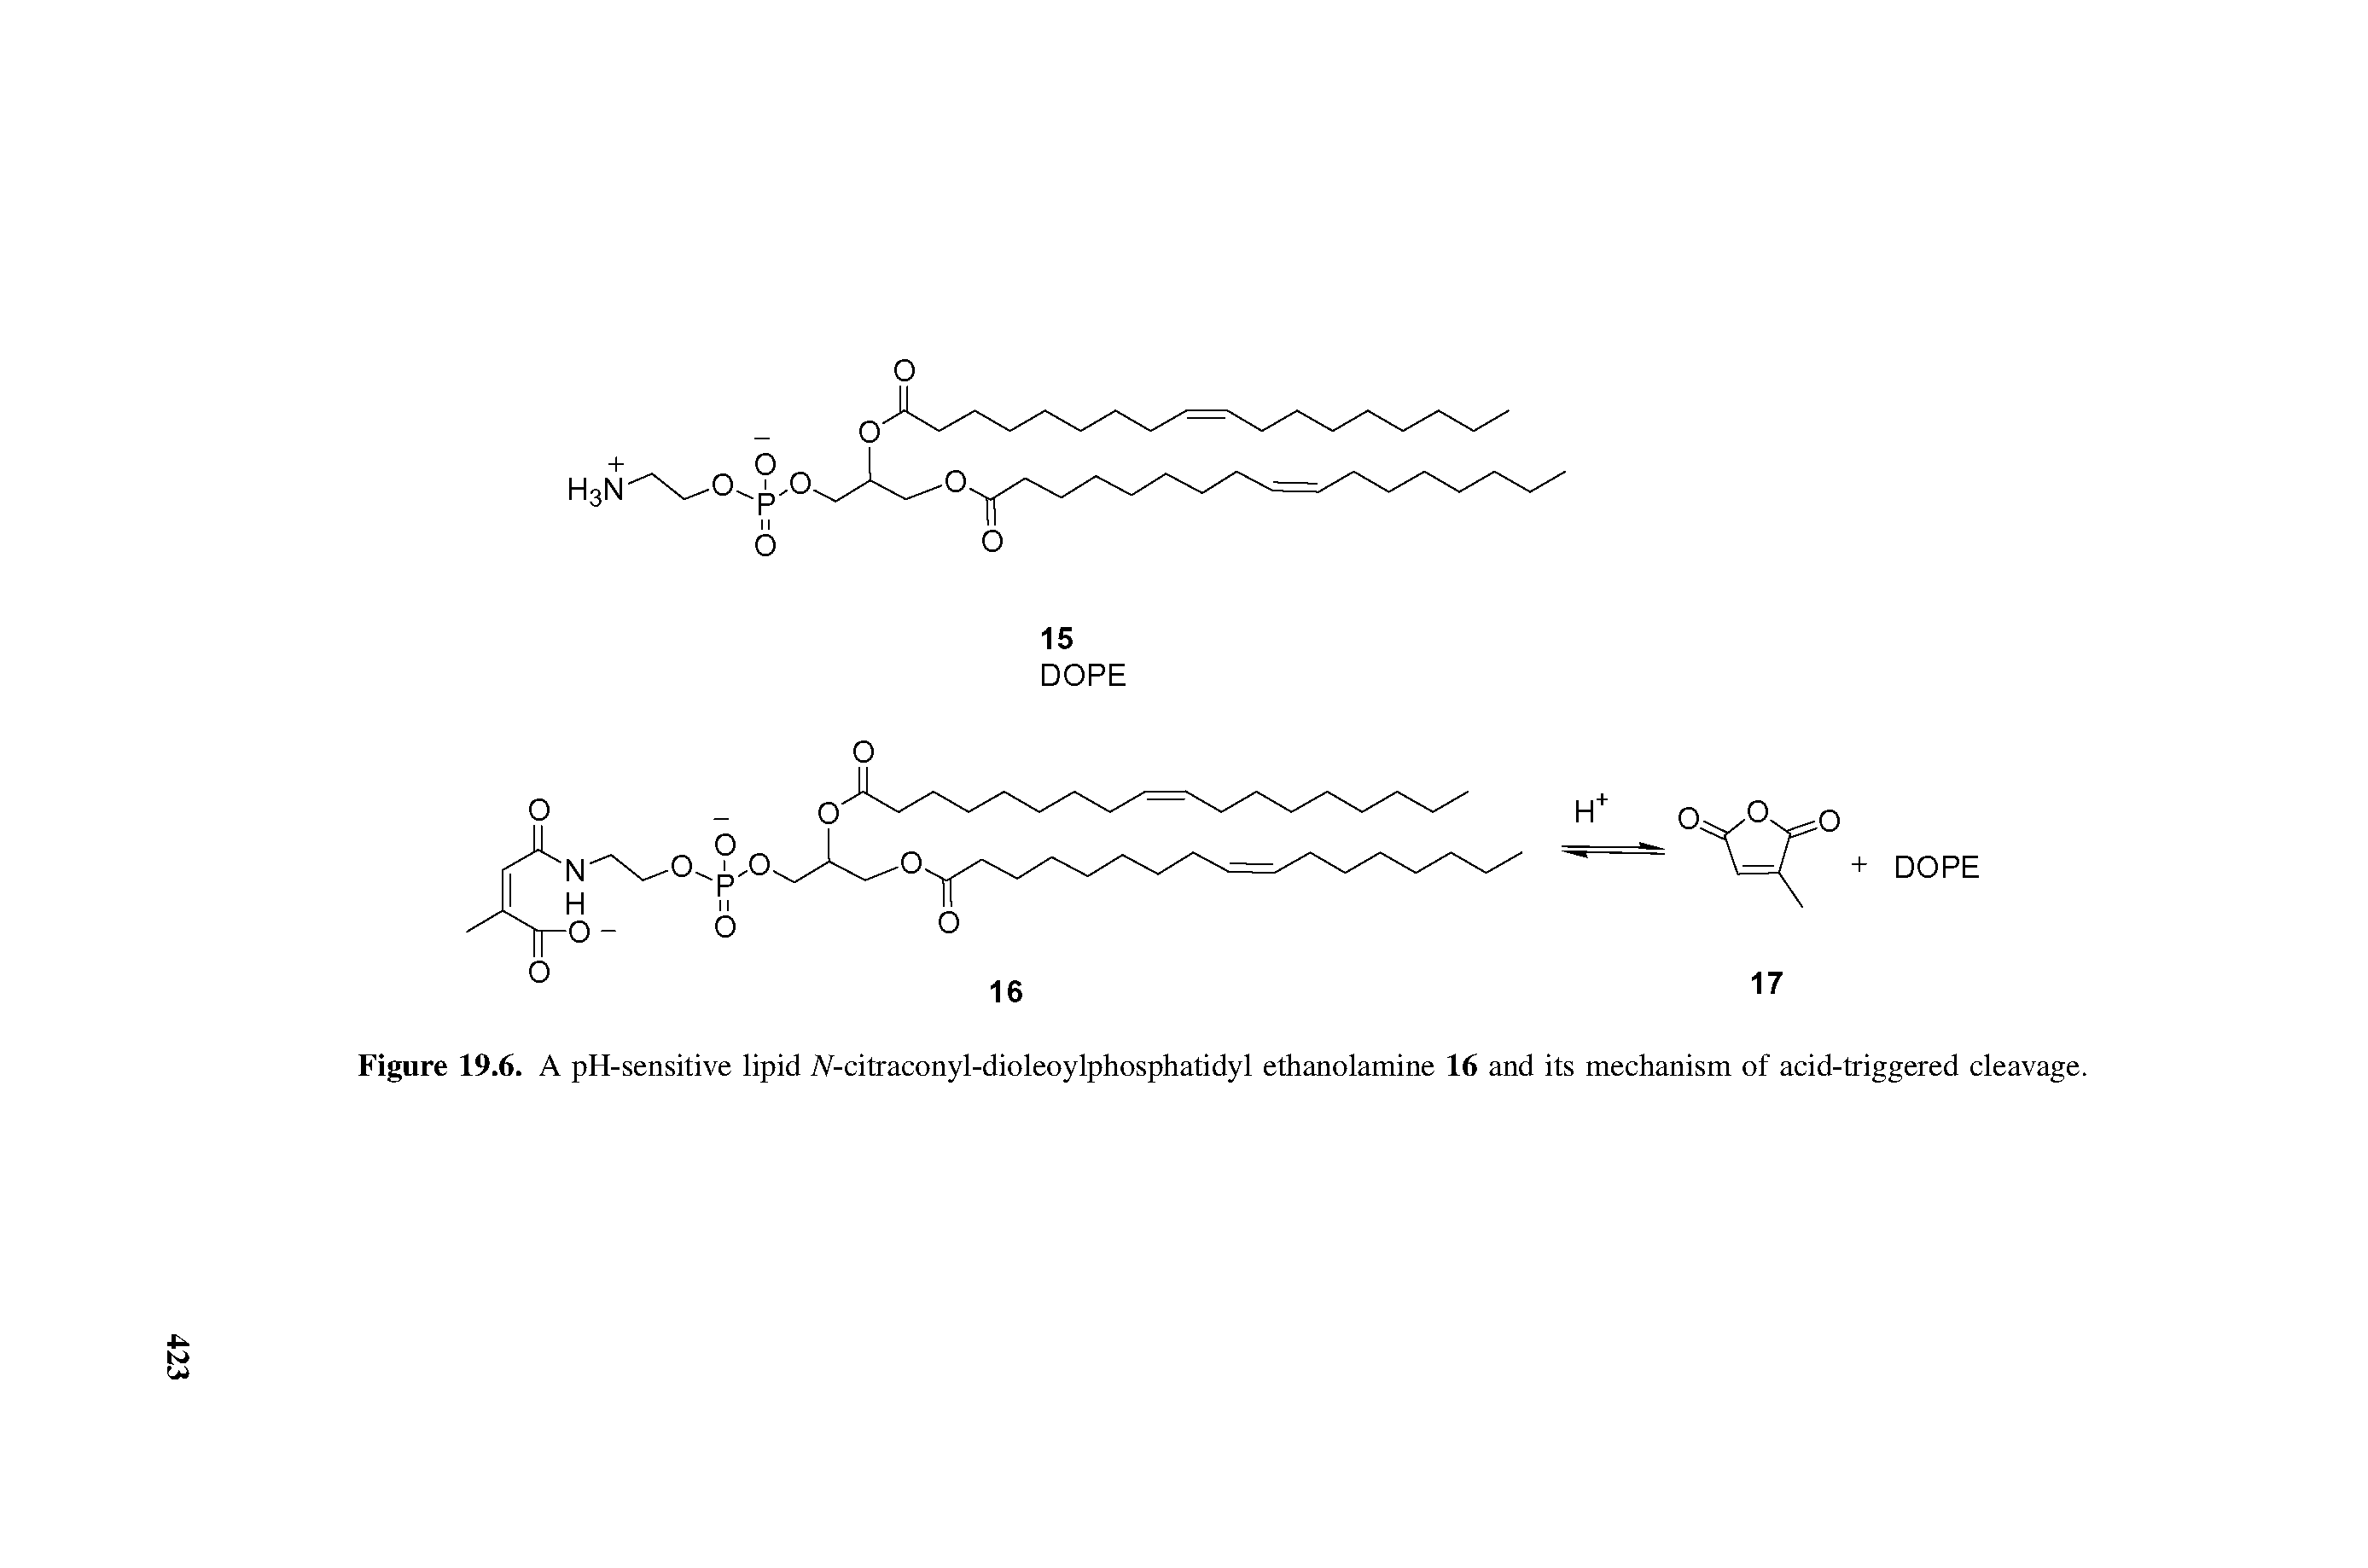 Figure 19.6. A pH-sensitive lipid A-citraconyl-dioleoylphosphatidyl ethanolamine 16 and its mechanism of acid-triggered cleavage.